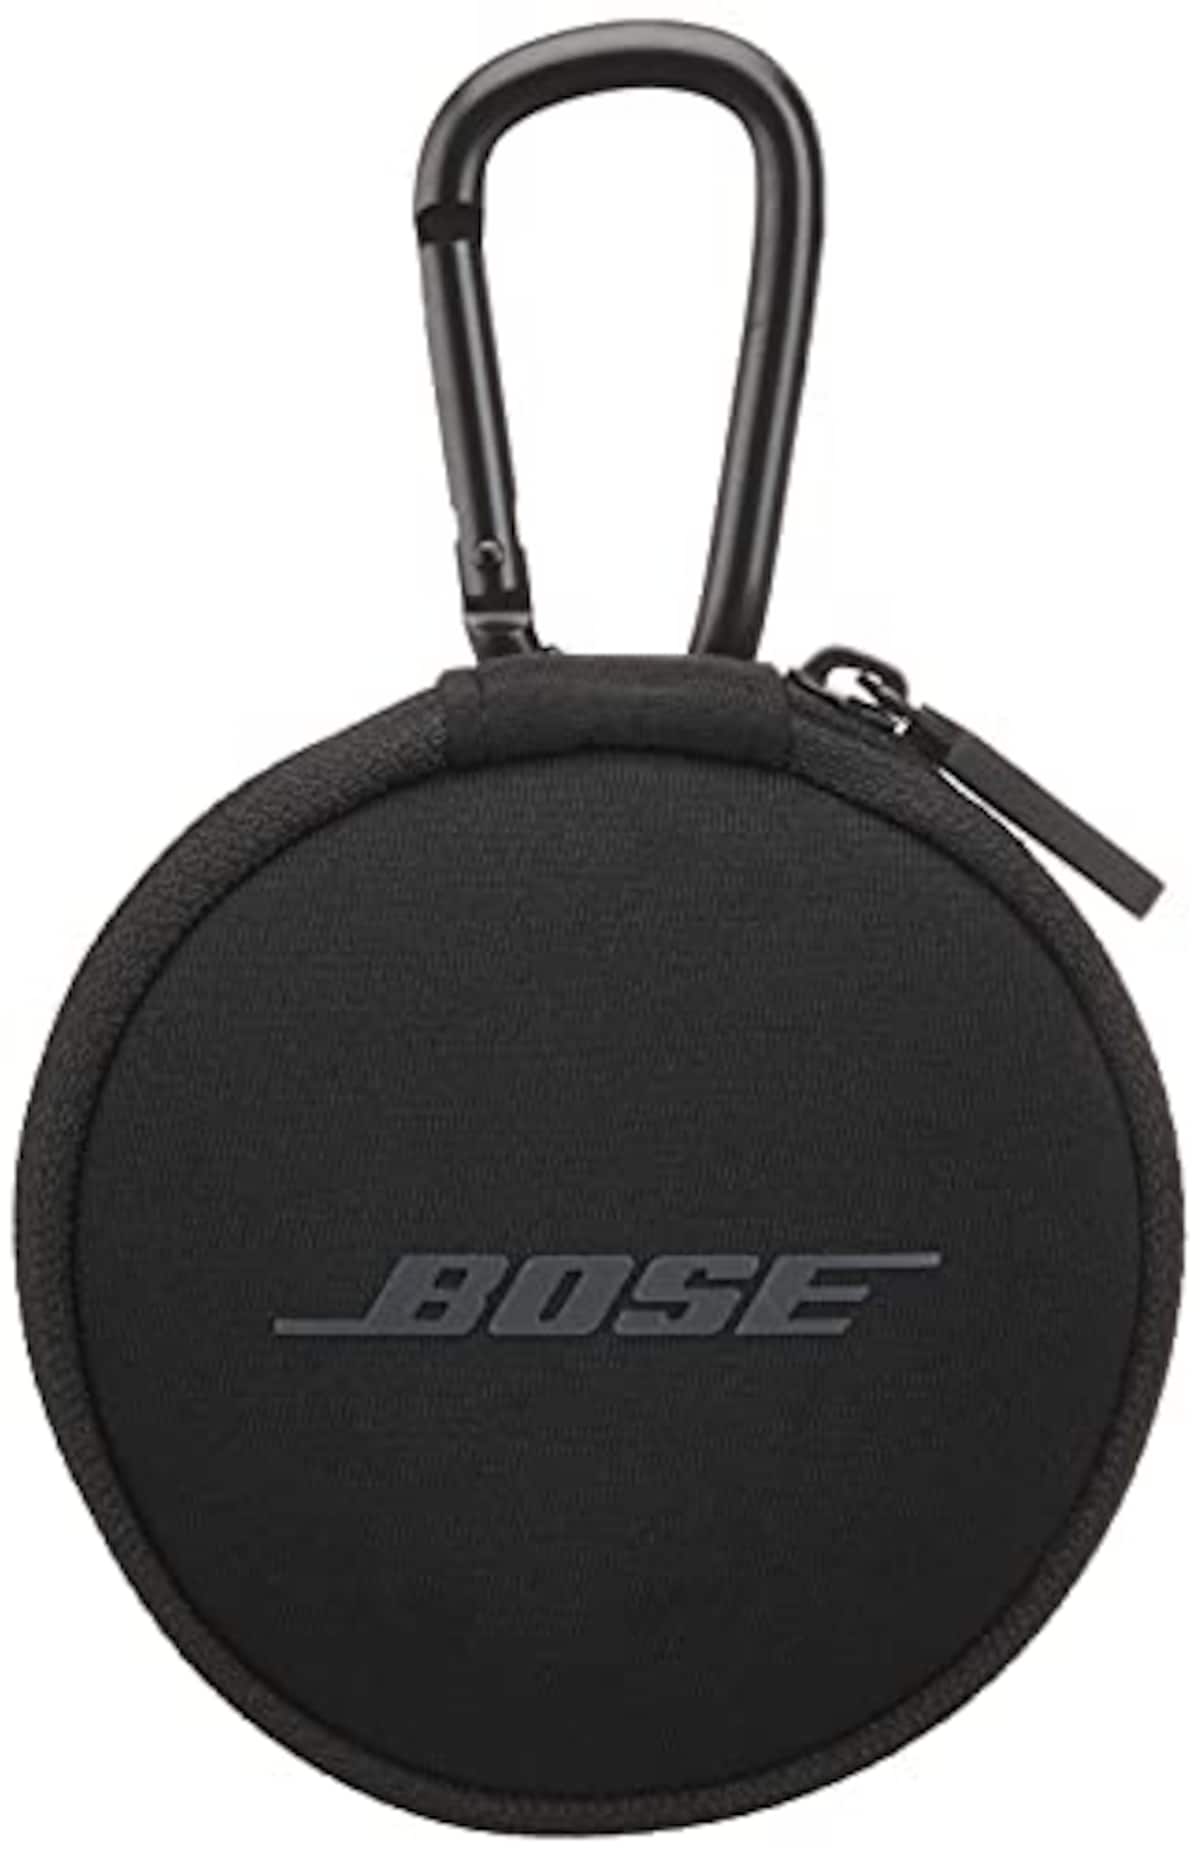 SoundSport wireless headphones carry case